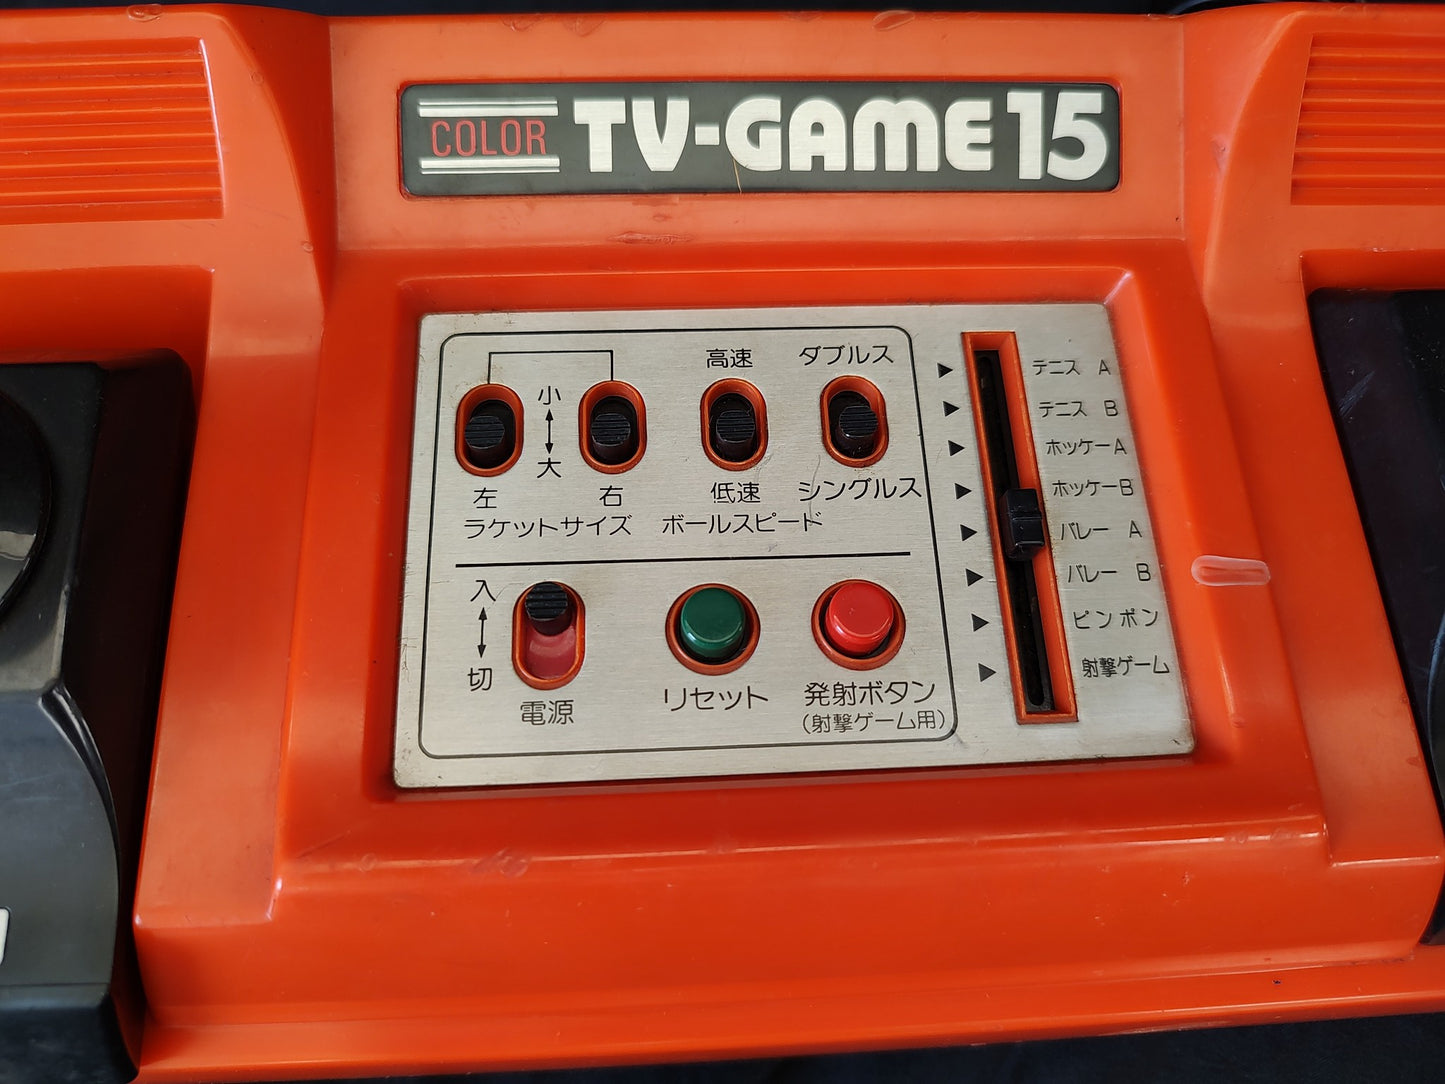 Broken/ JUNK Nintendo TV GAME 15 (CTG-15V) console system, Not Working-g0318-3-